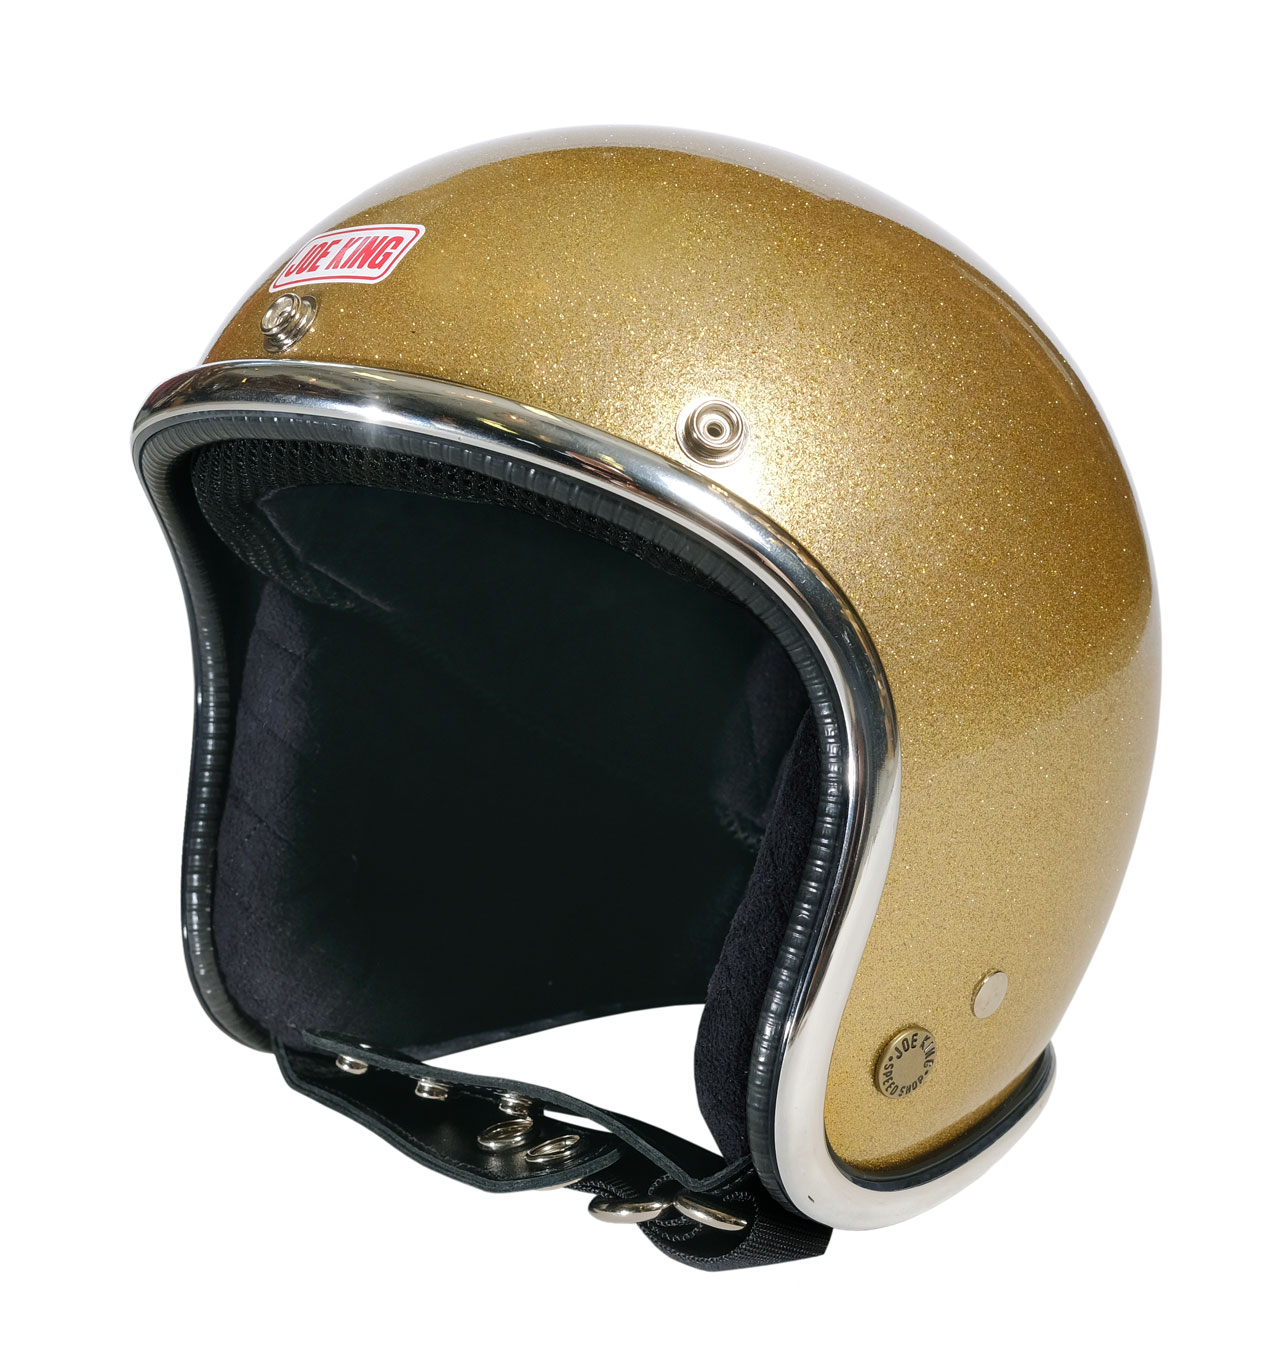 Joe King - JK400 Gold Flake Helmet